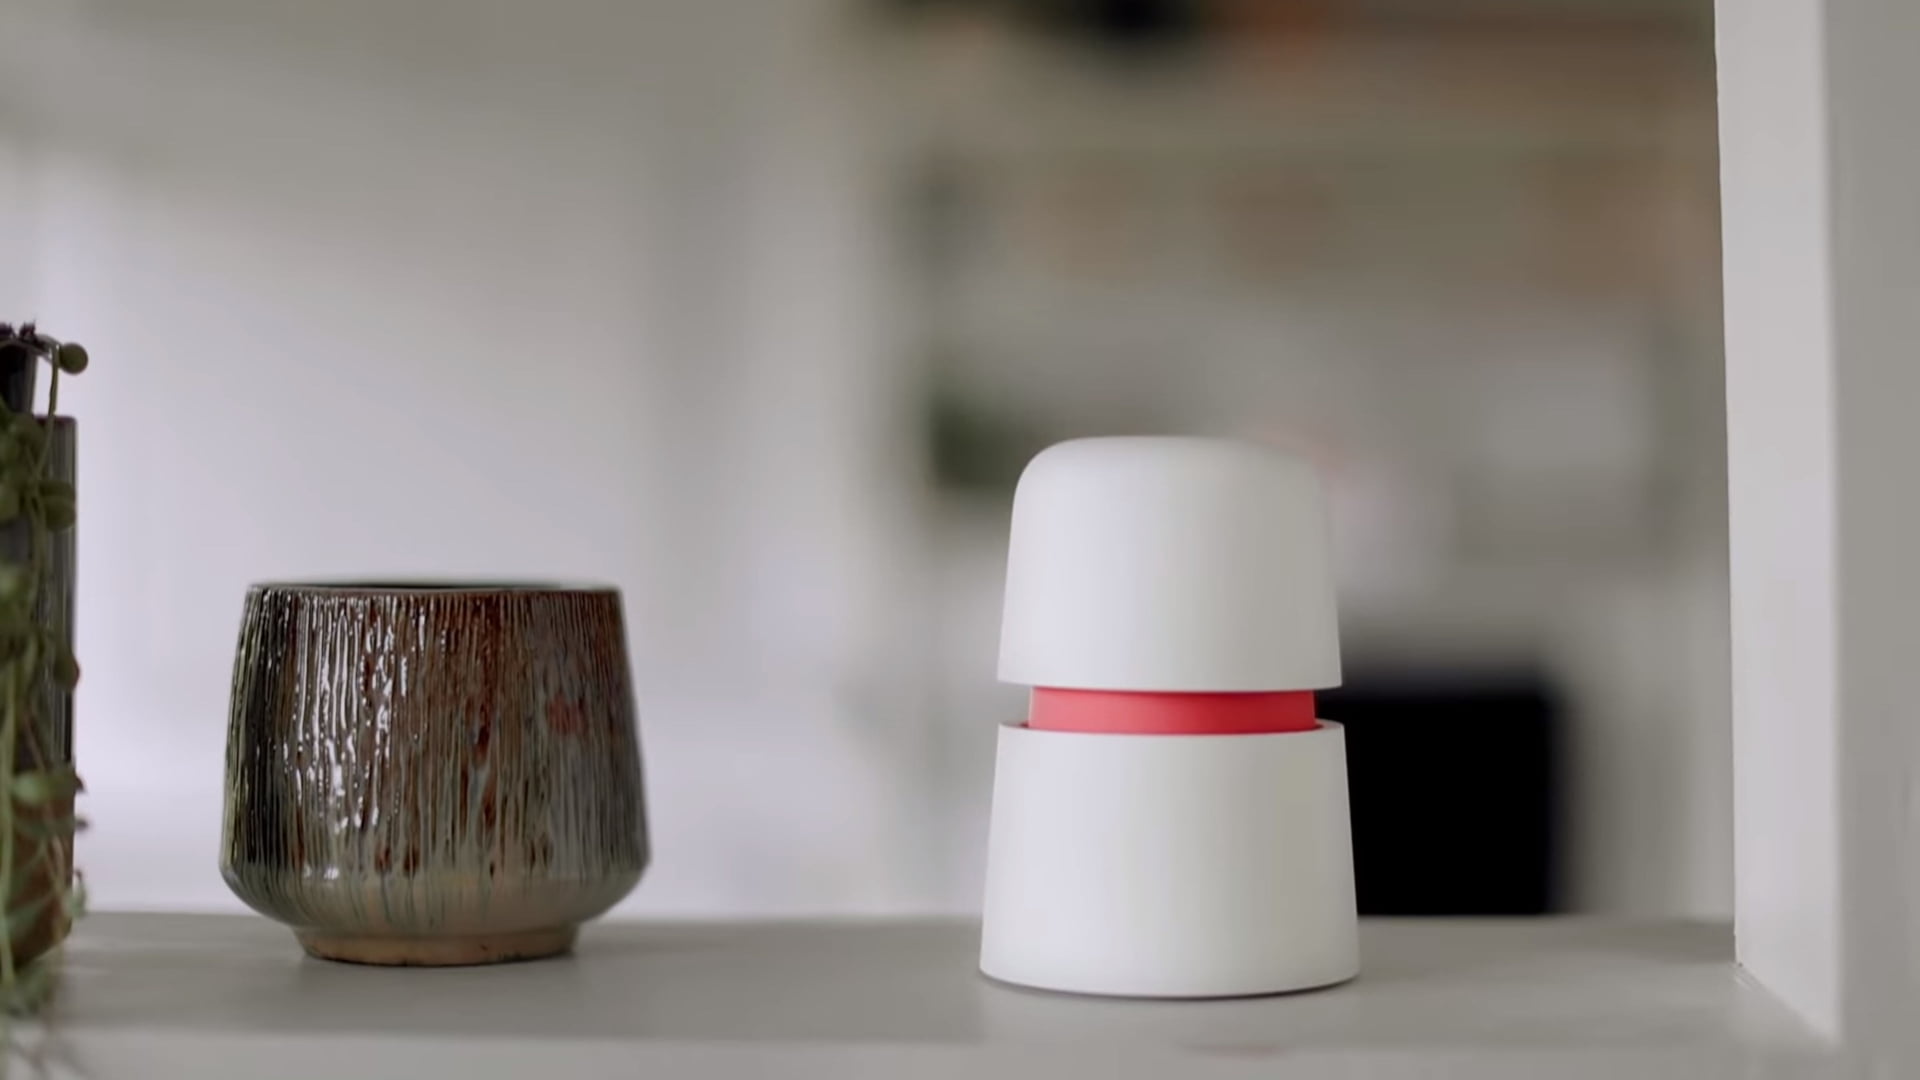 Little Signals: Is Google revolutionizing smart home interaction?